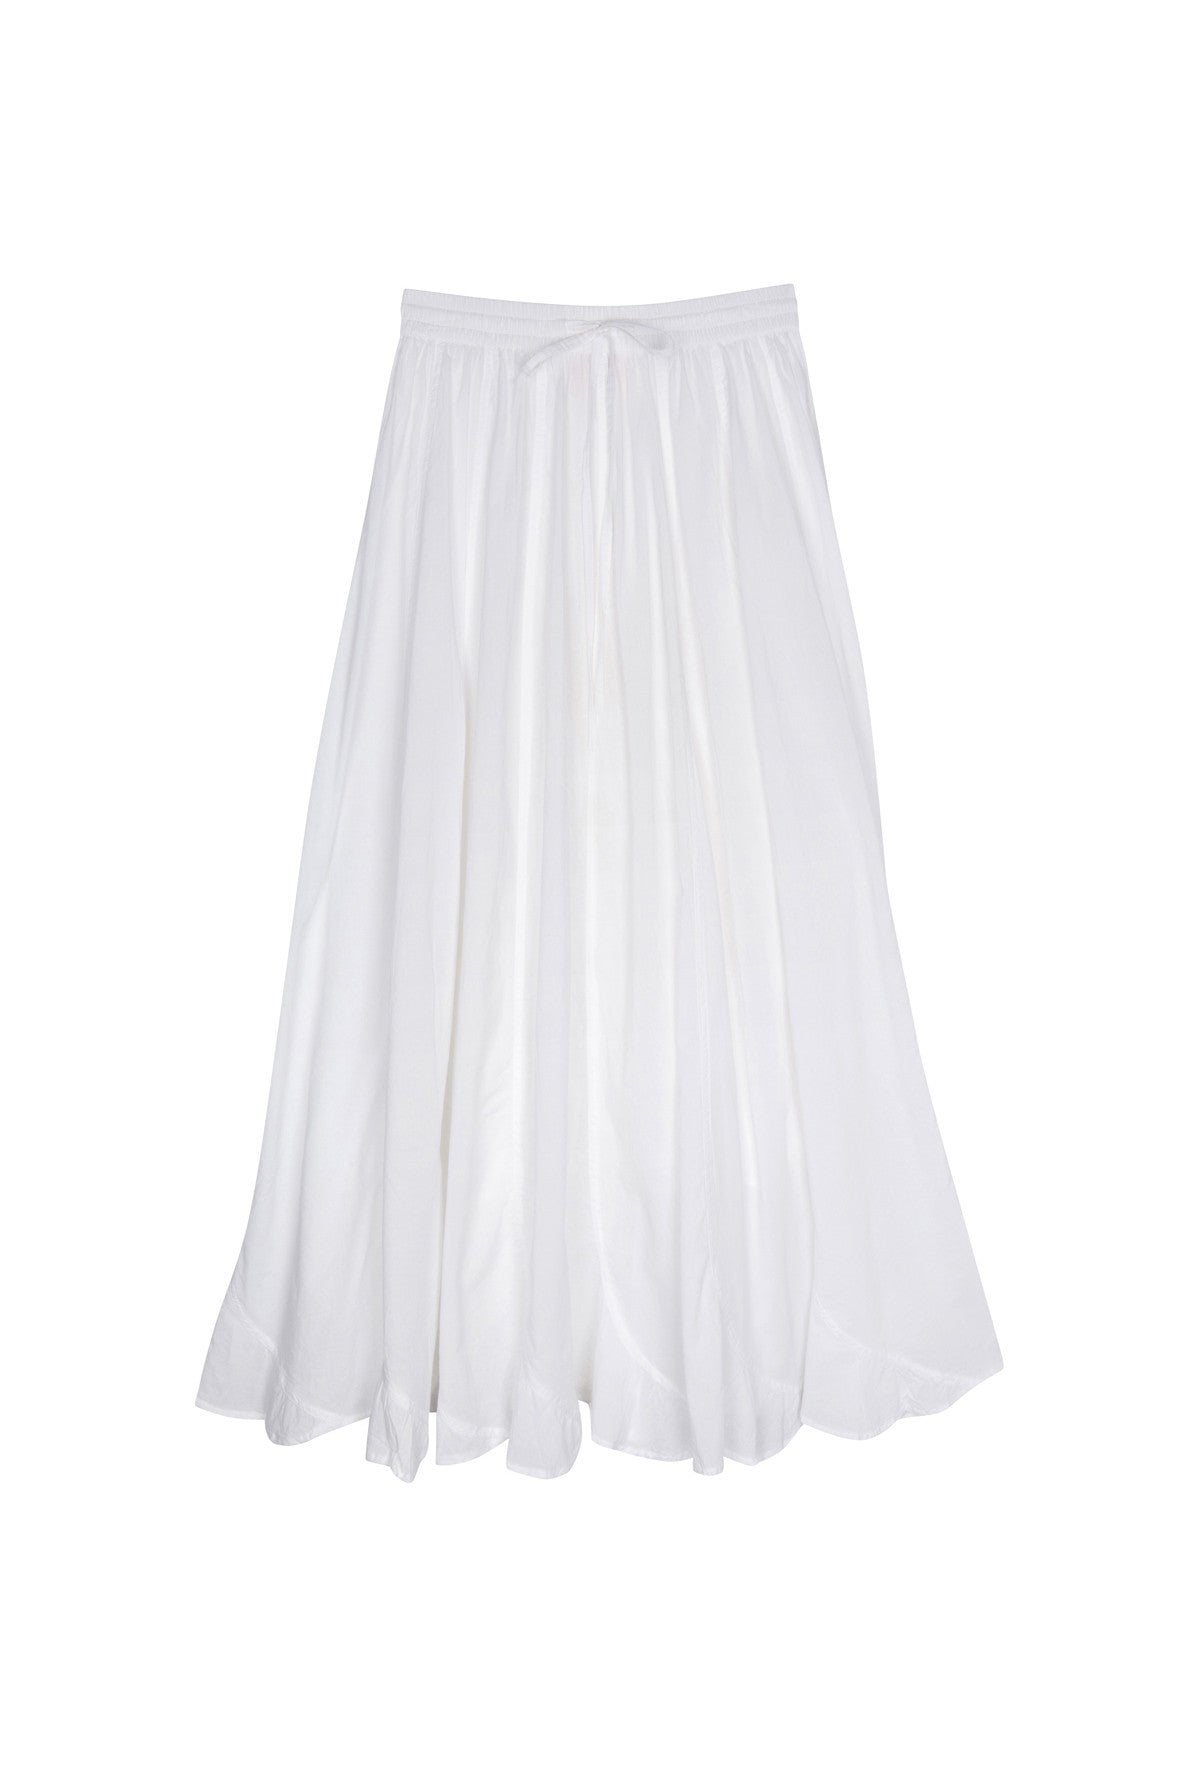 The Viola Prairie Skirt - White - J. Marin